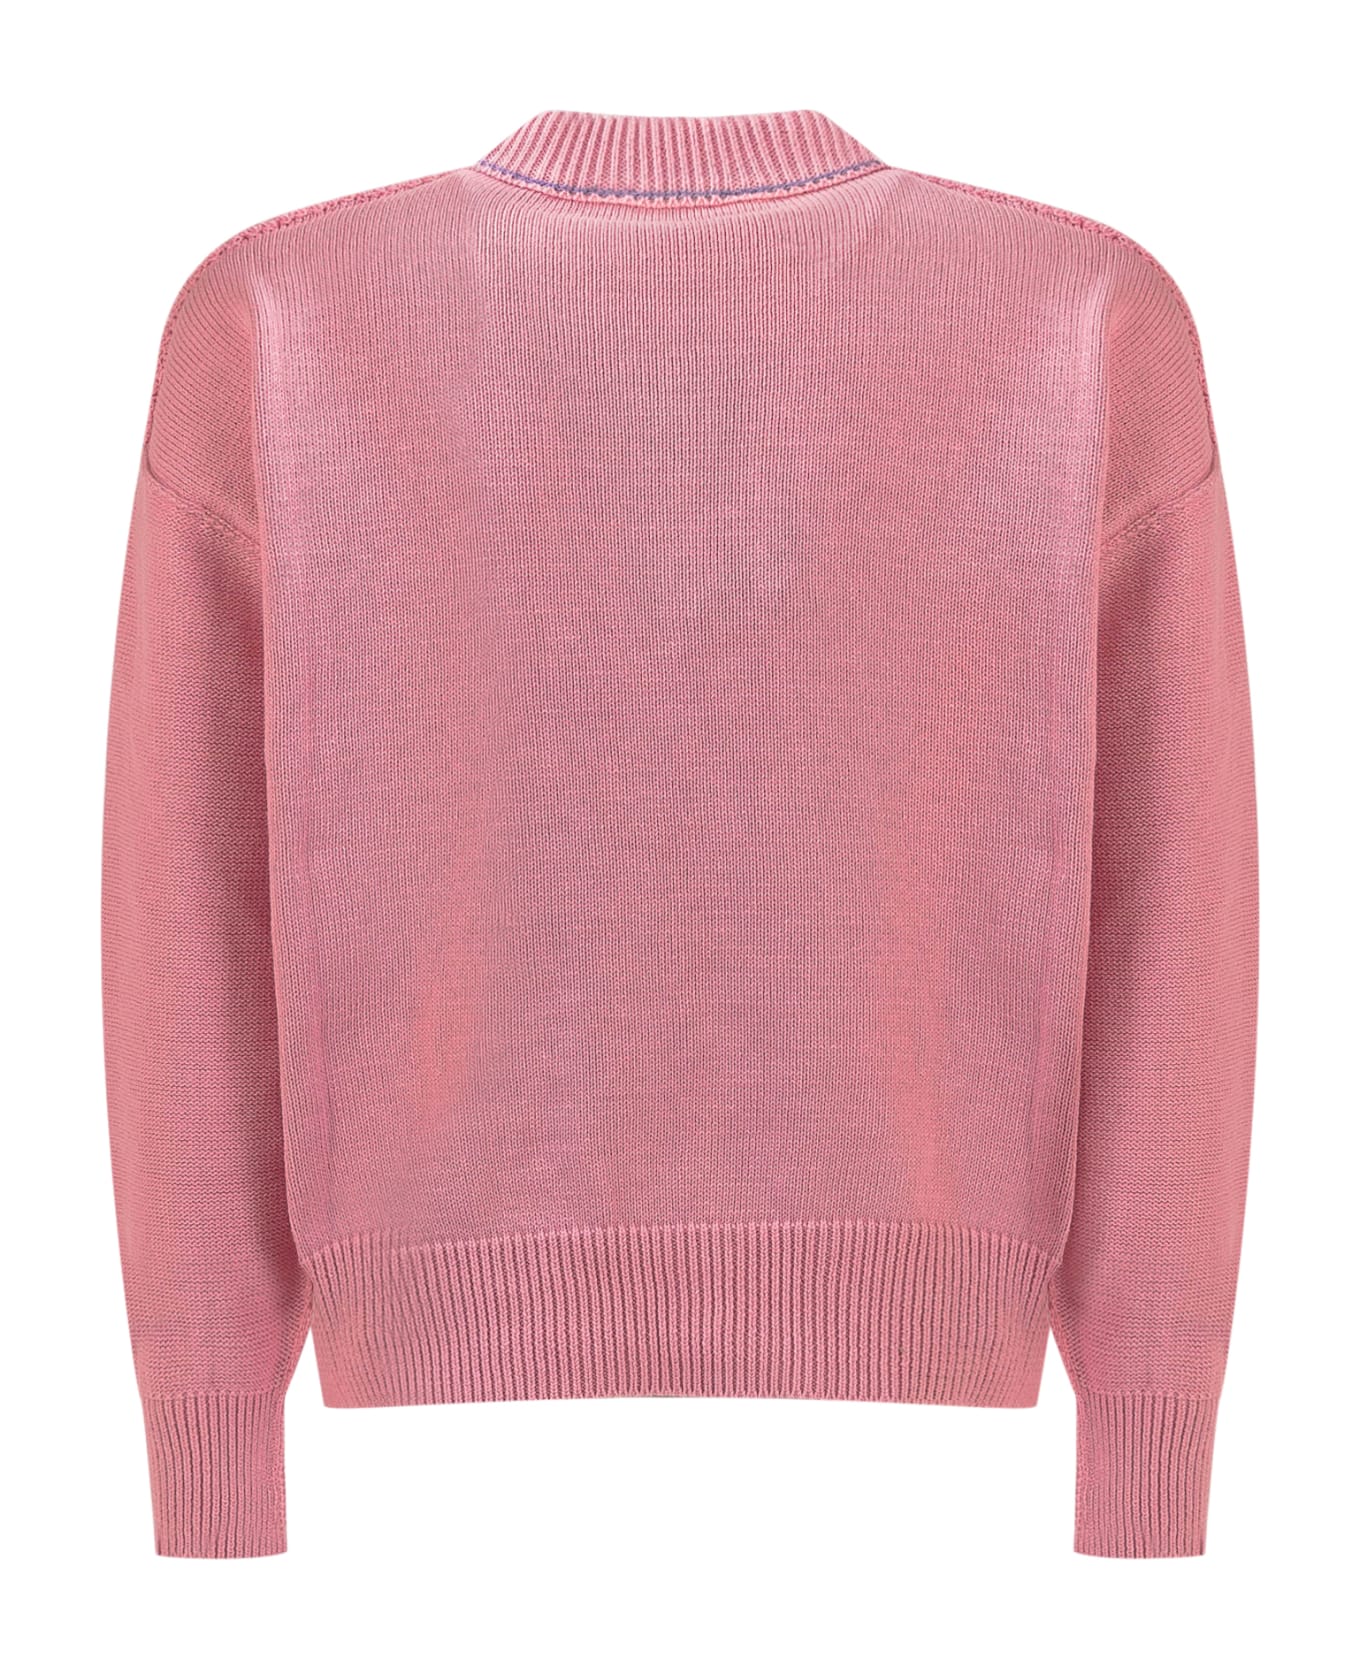 Palm Angels Logo Sweater - Rose Quart